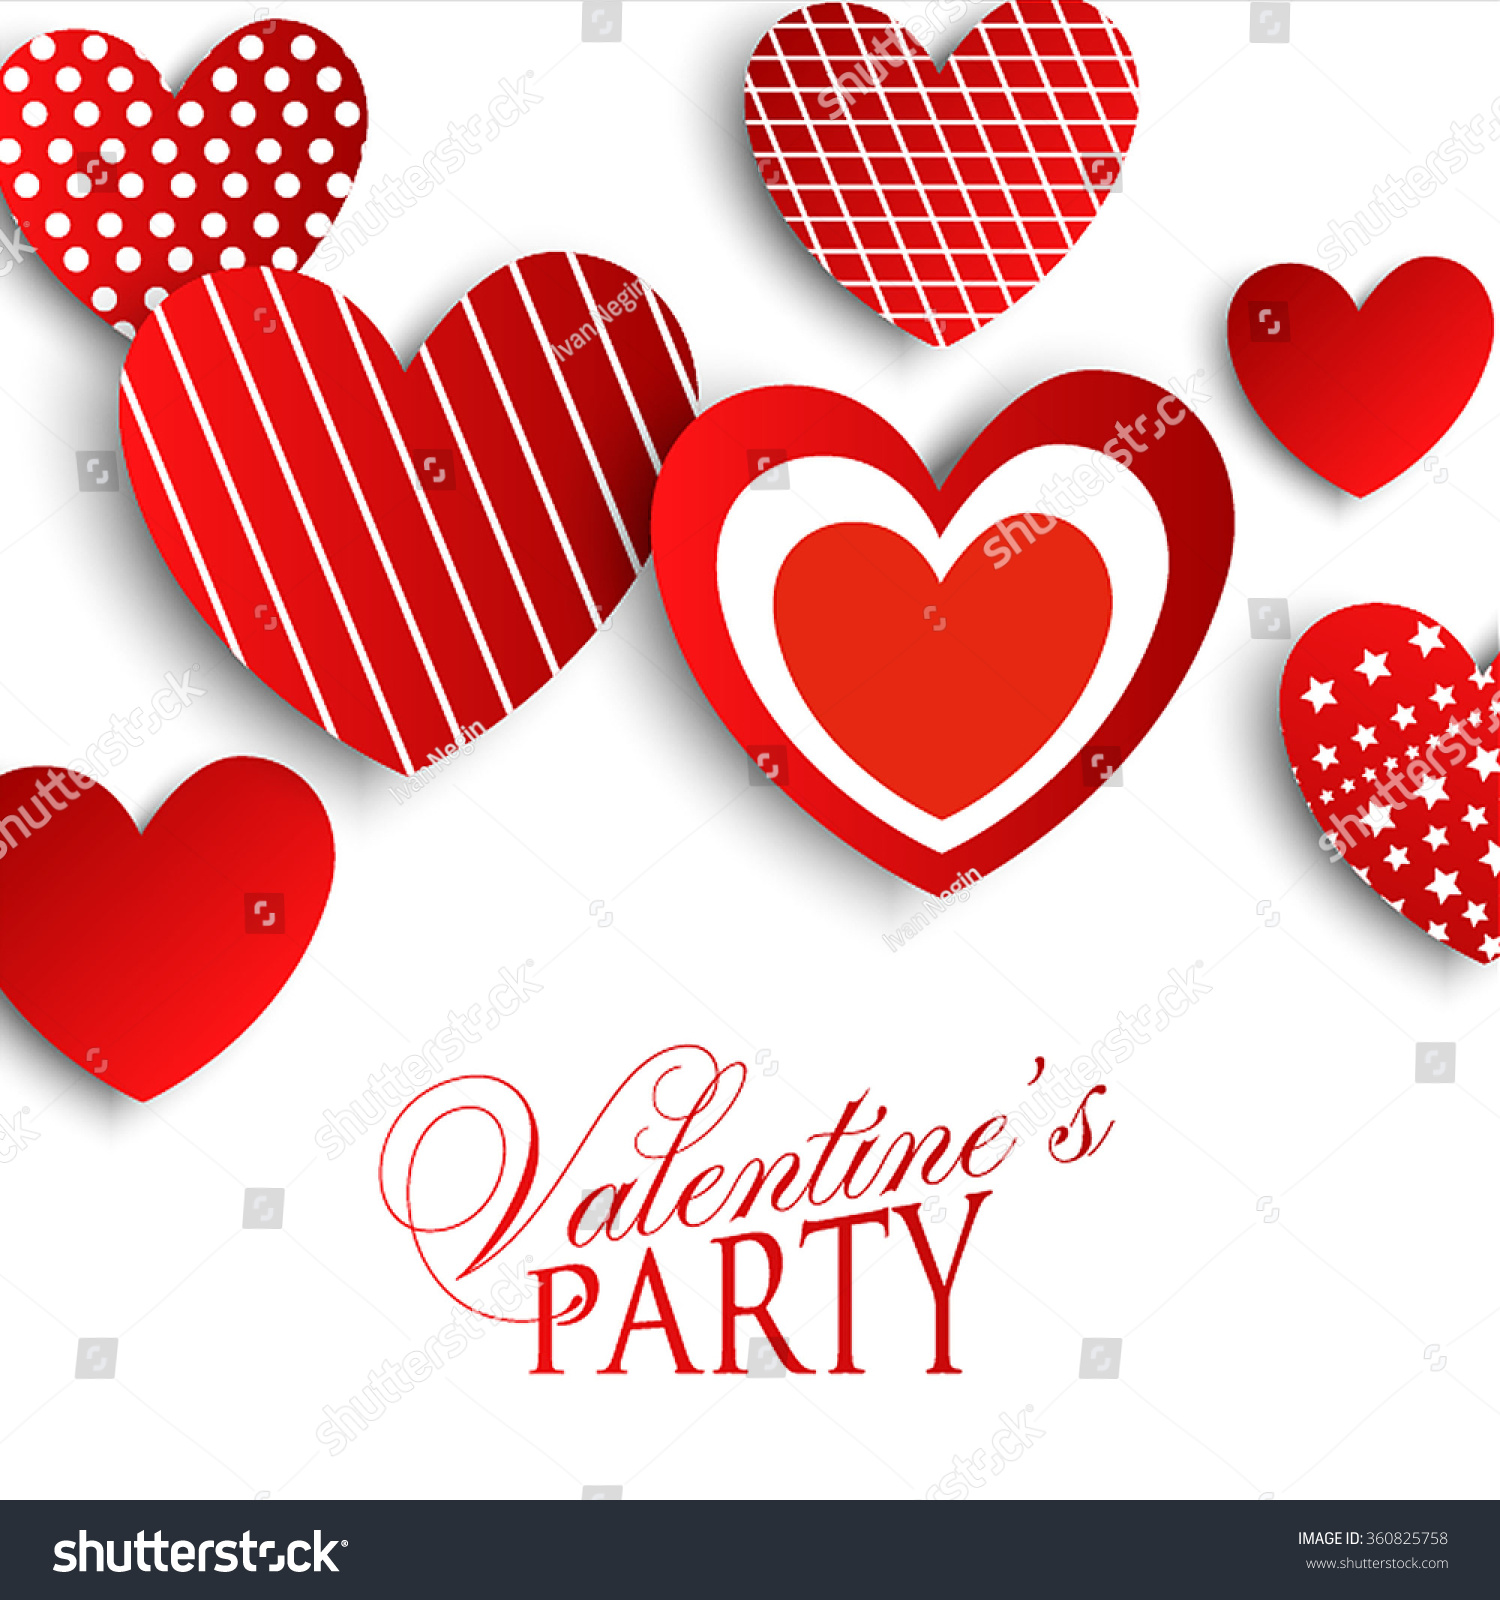 Valentine's Party Invitation  #360825758